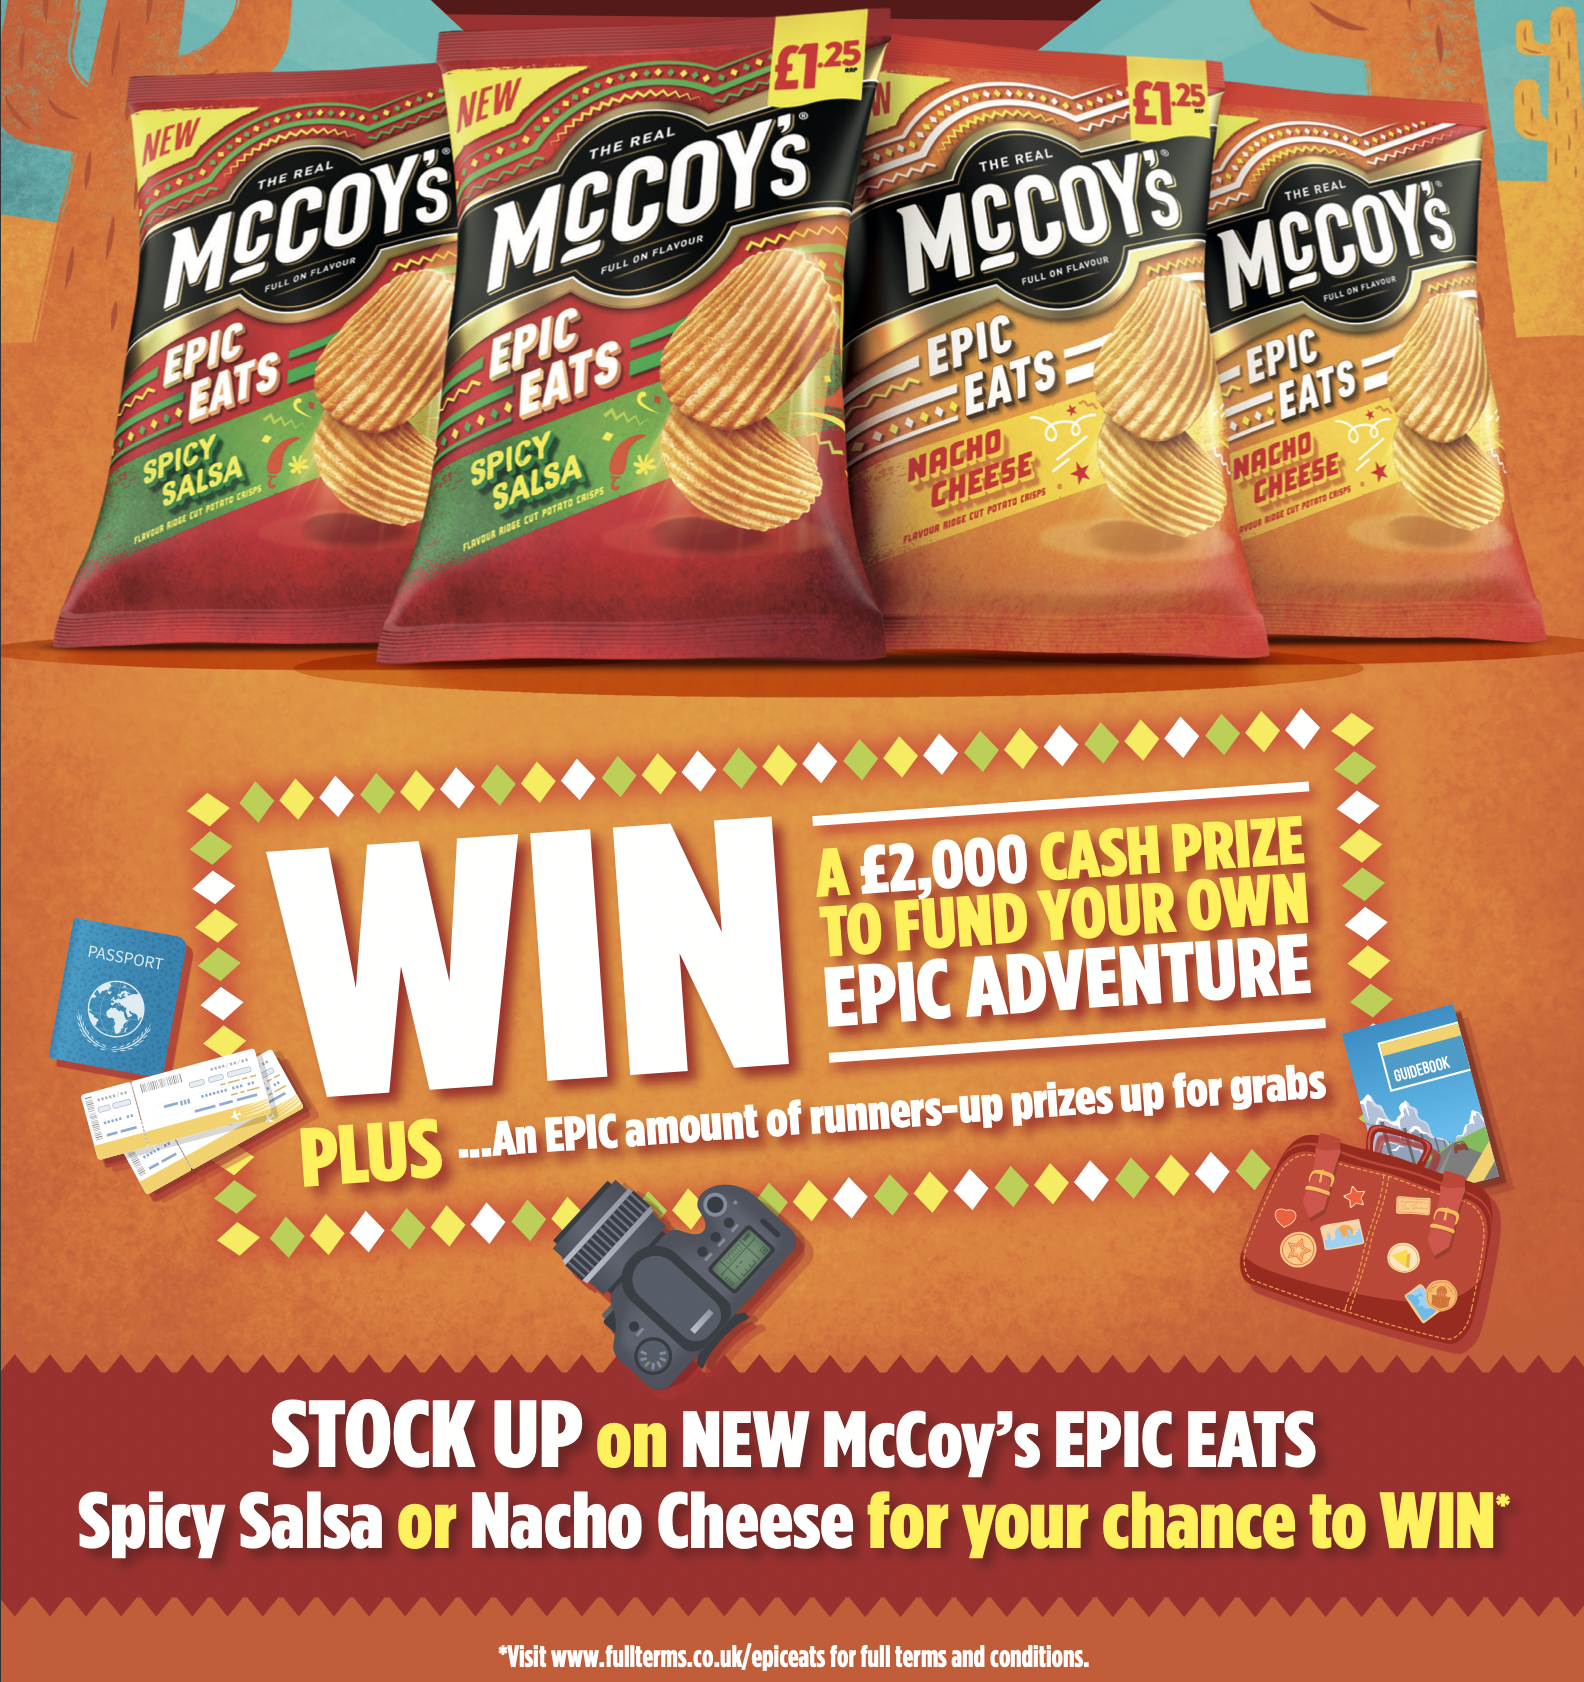 KP Snacks launches McCoy’s Epic Eats retailer competition